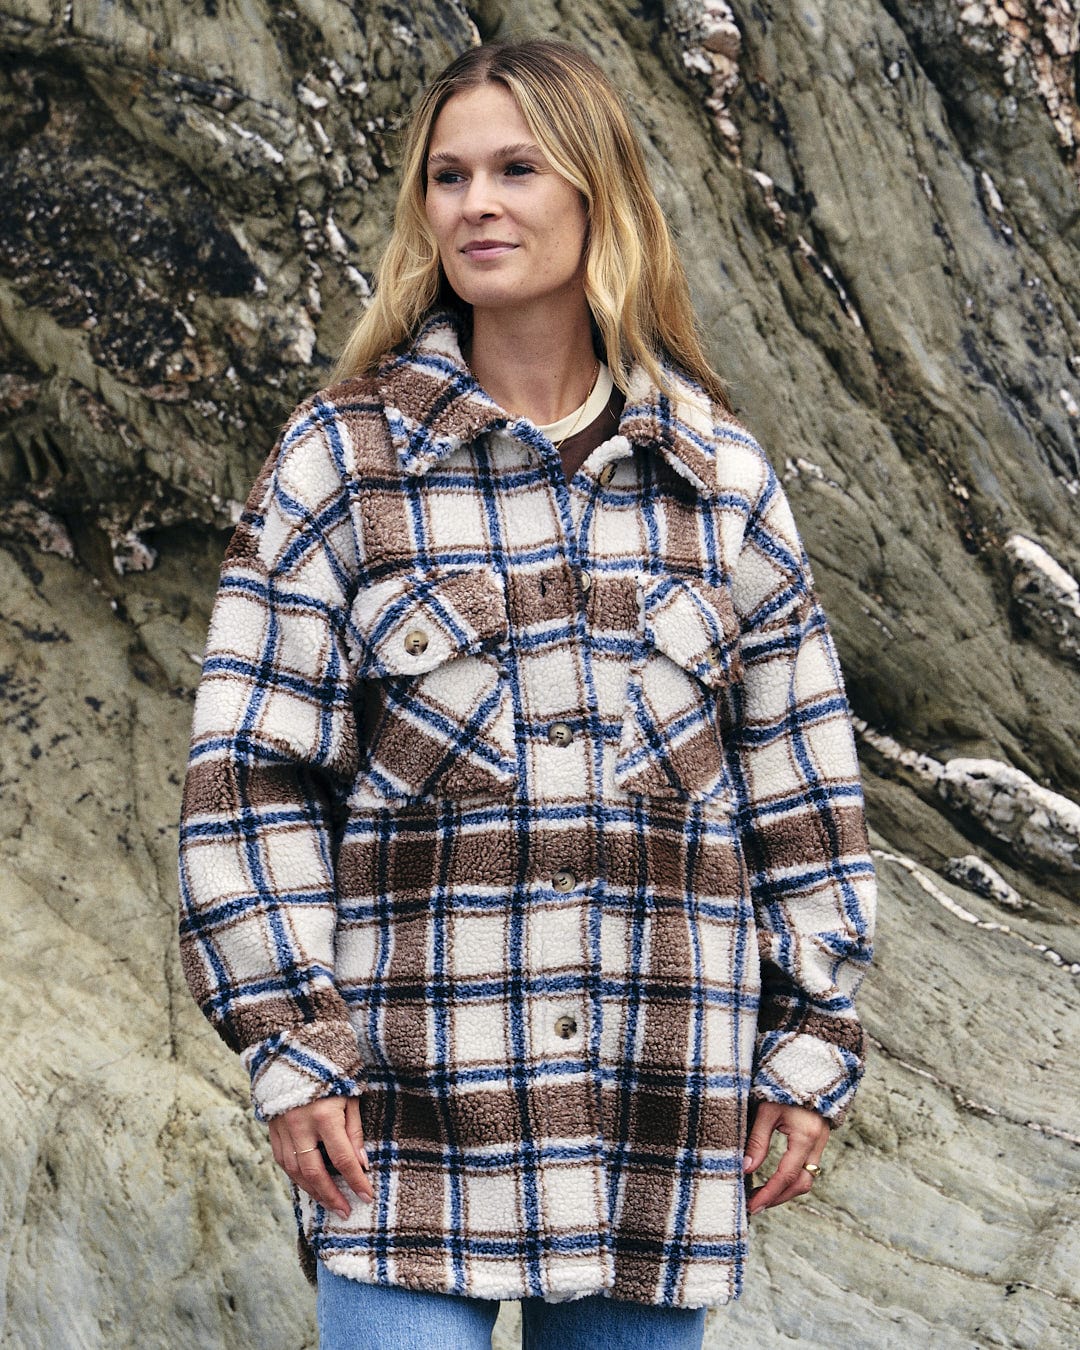 A woman wearing a Laurie - Womens Check Sherpa Fleece Coat - Cream by Saltrock standing in front of rocks.